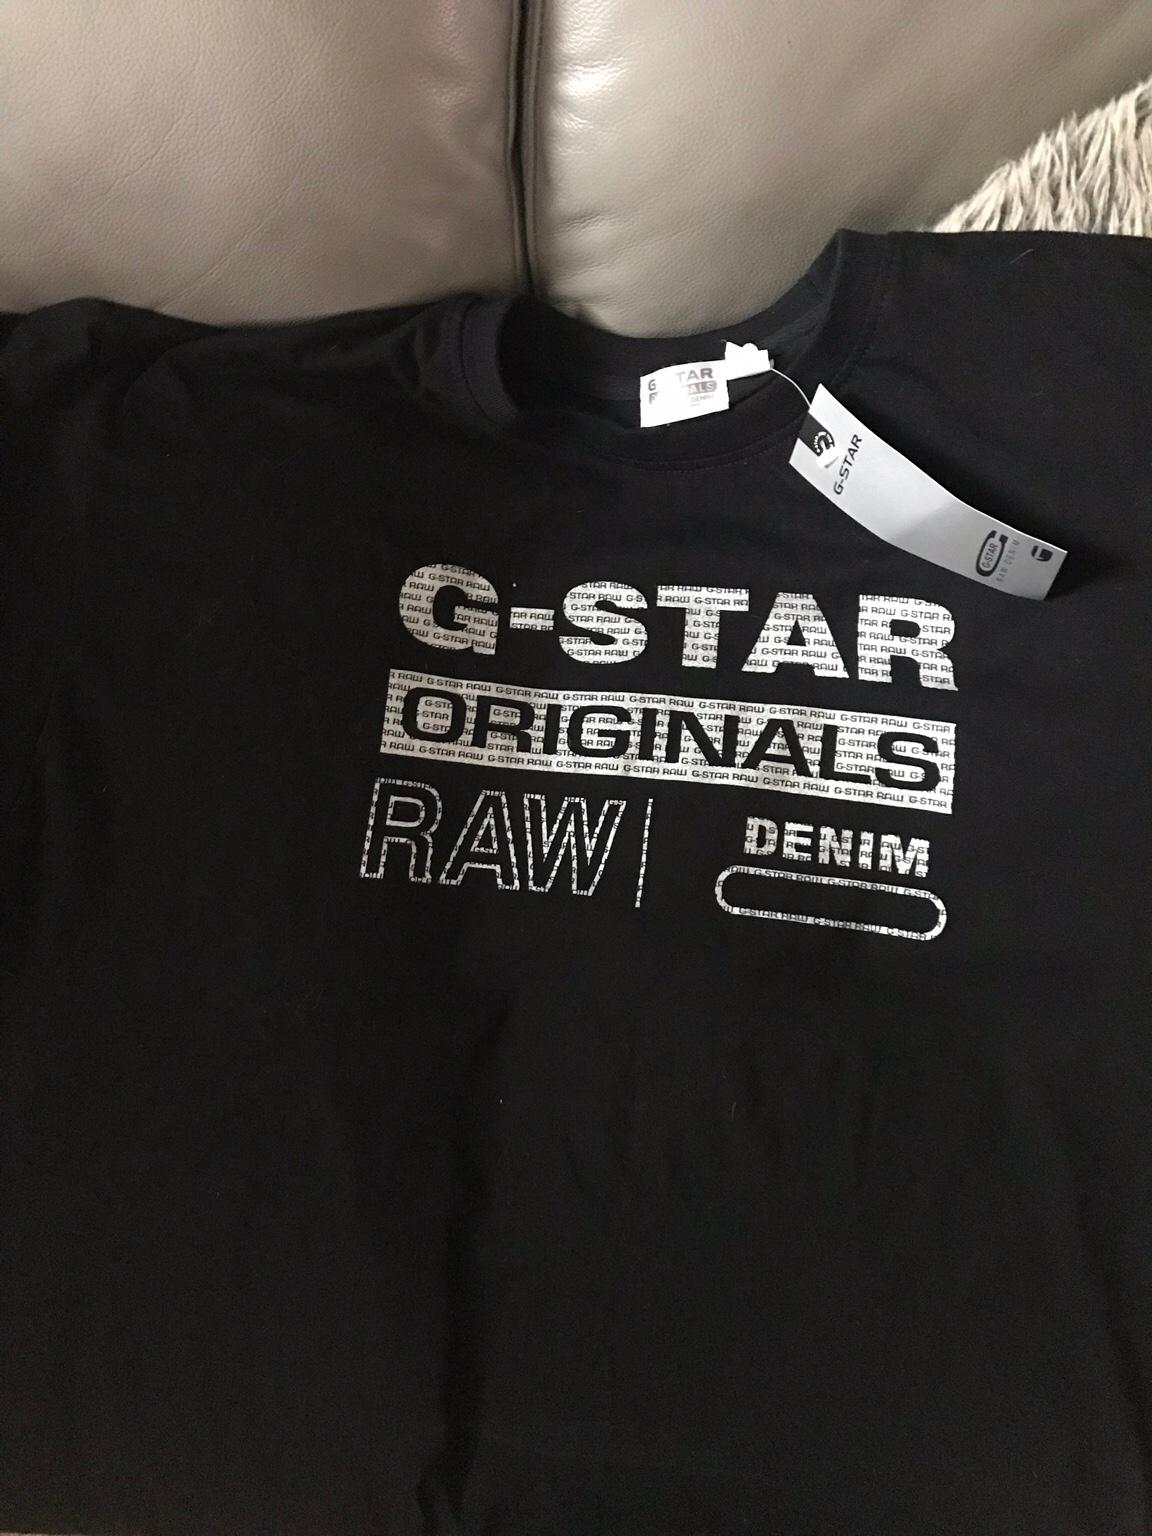 g star originals raw denim t shirt